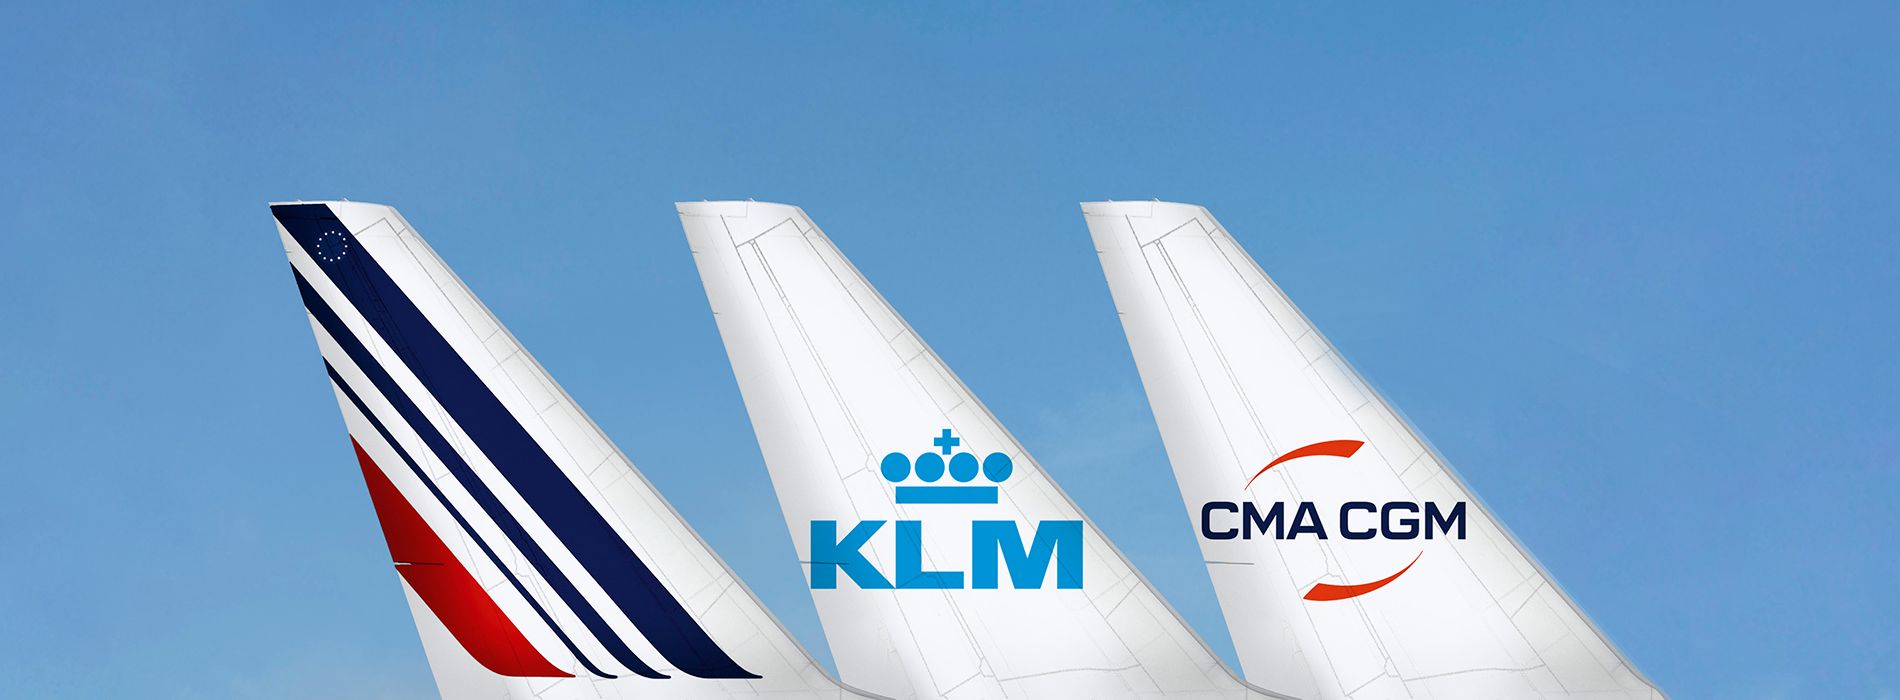 CMA CGM KLM Air France Tails